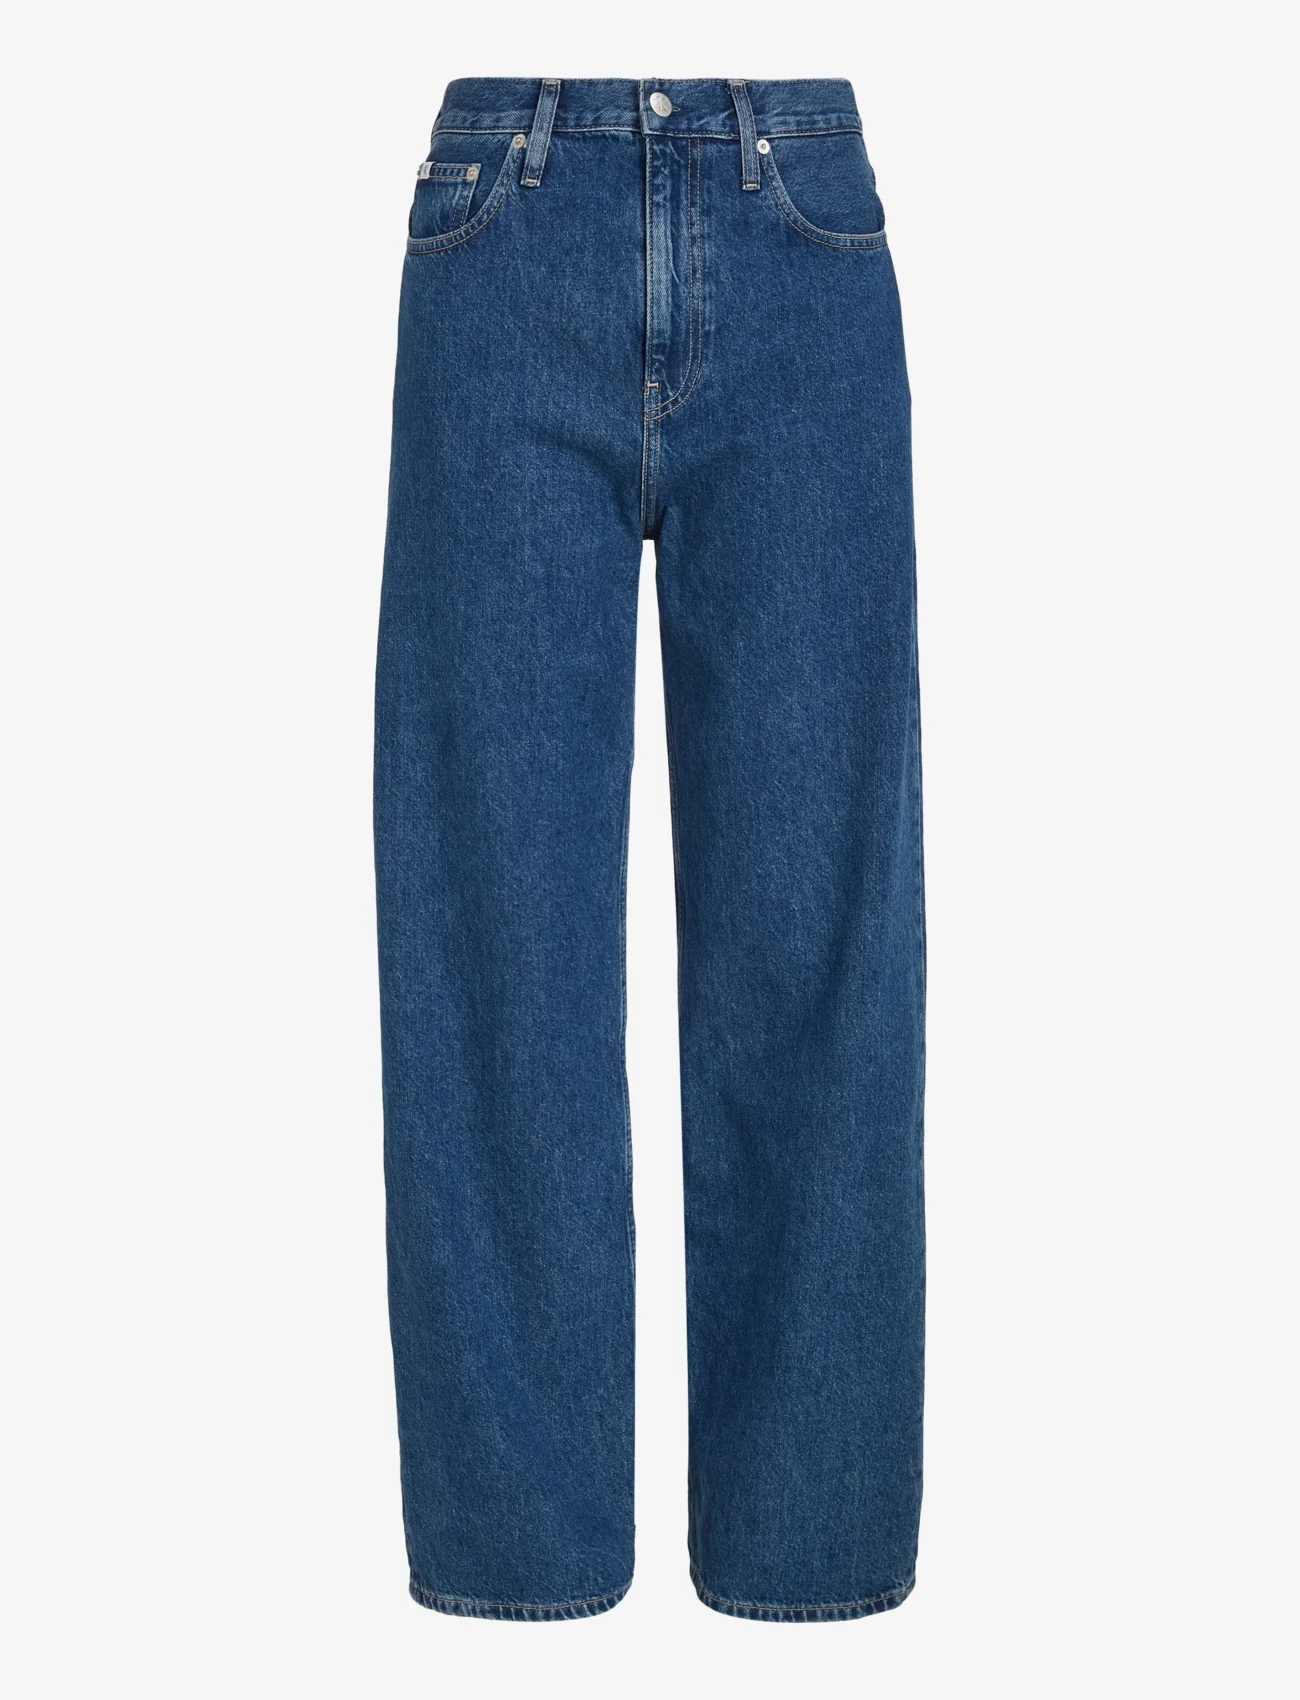 Calvin Klein Jeans - HIGH RISE RELAXED - straight jeans - denim medium - 0